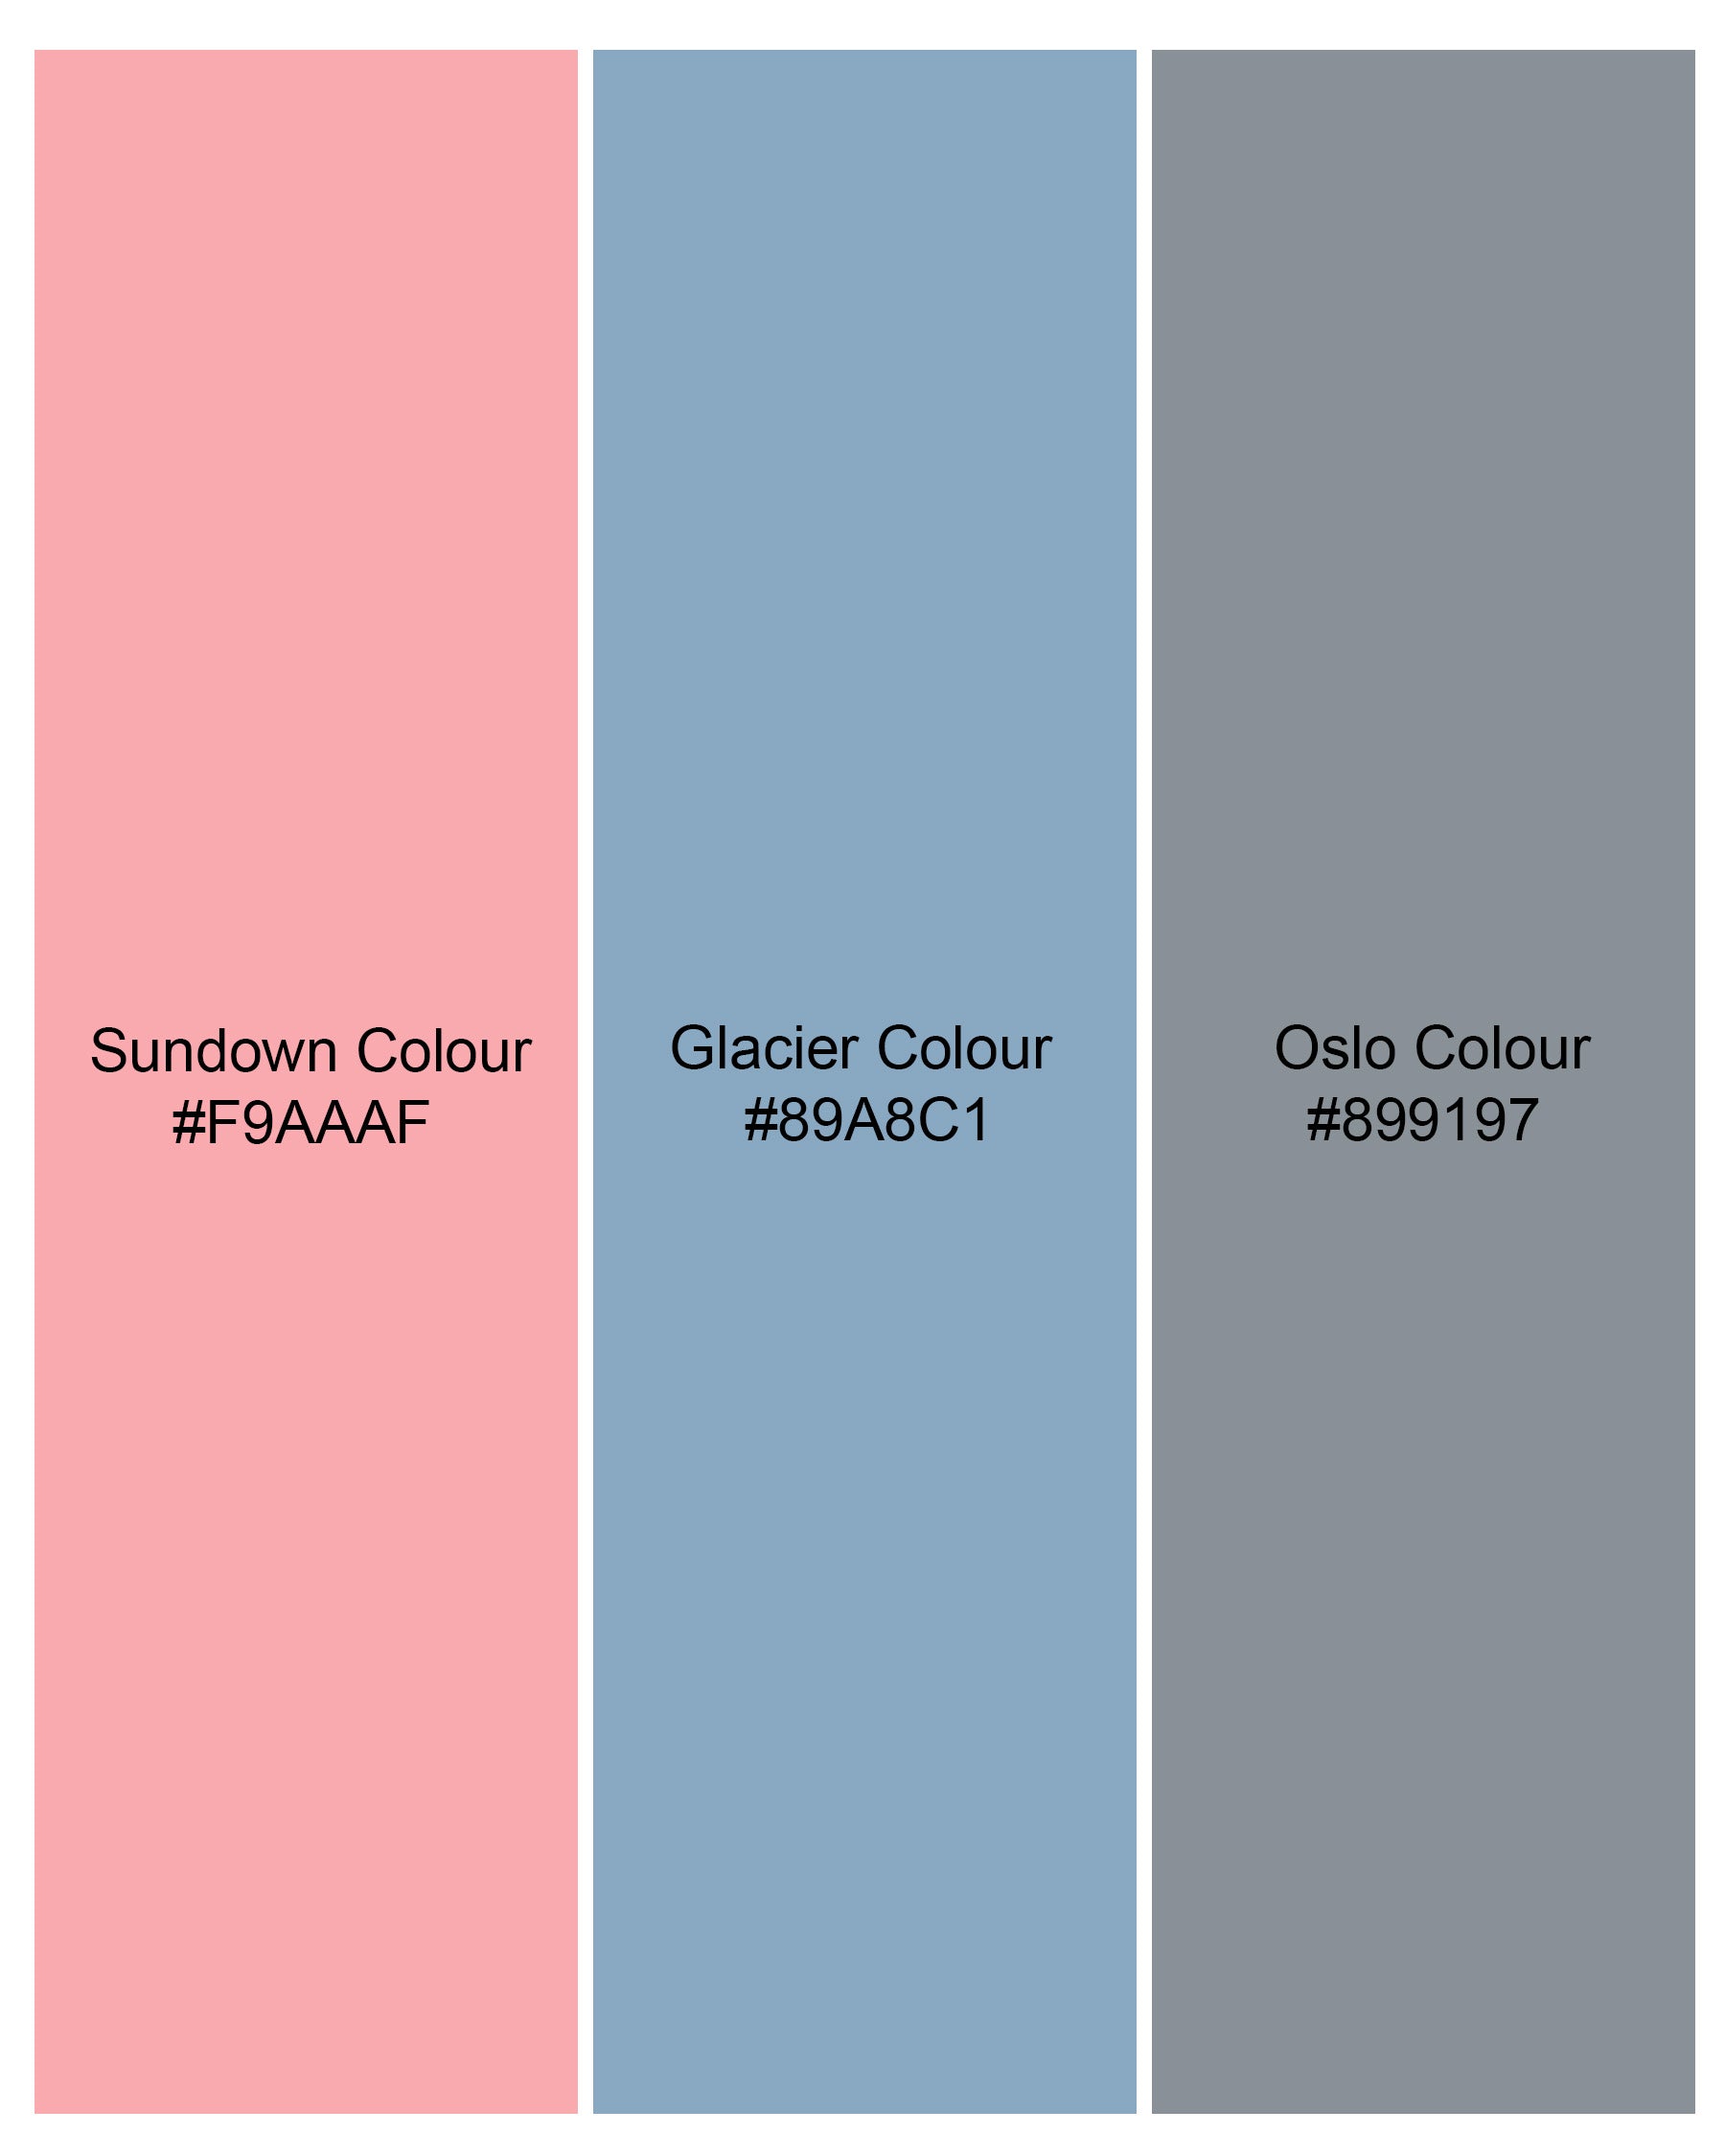 Sundown Light Orange and Glacier Blue Striped Dobby Textured Premium Giza Cotton Shirt 7898-38, 7898-H-38, 7898-39, 7898-H-39, 7898-40, 7898-H-40, 7898-42, 7898-H-42, 7898-44, 7898-H-44, 7898-46, 7898-H-46, 7898-48, 7898-H-48, 7898-50, 7898-H-50, 7898-52, 7898-H-52